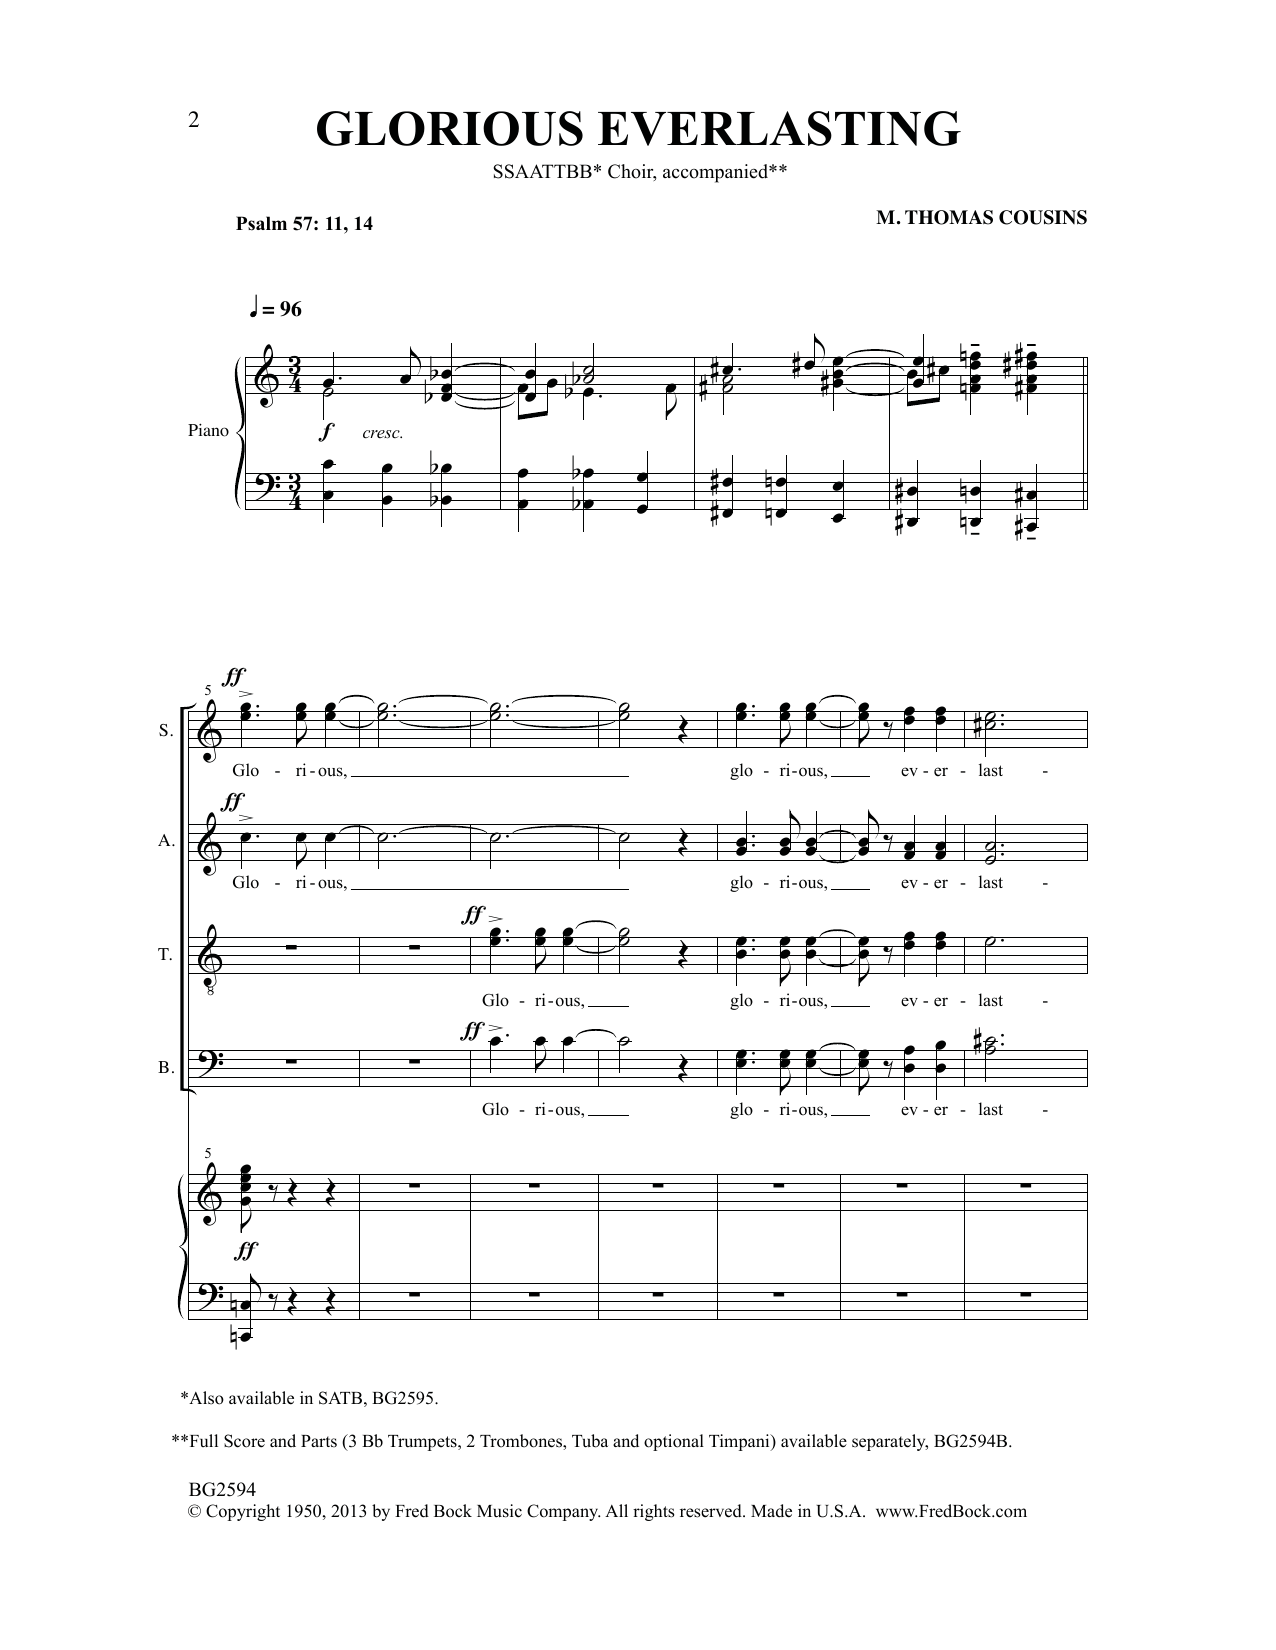 M. Thomas Cousins Glorious Everlasting Sheet Music Notes & Chords for SATB Choir - Download or Print PDF